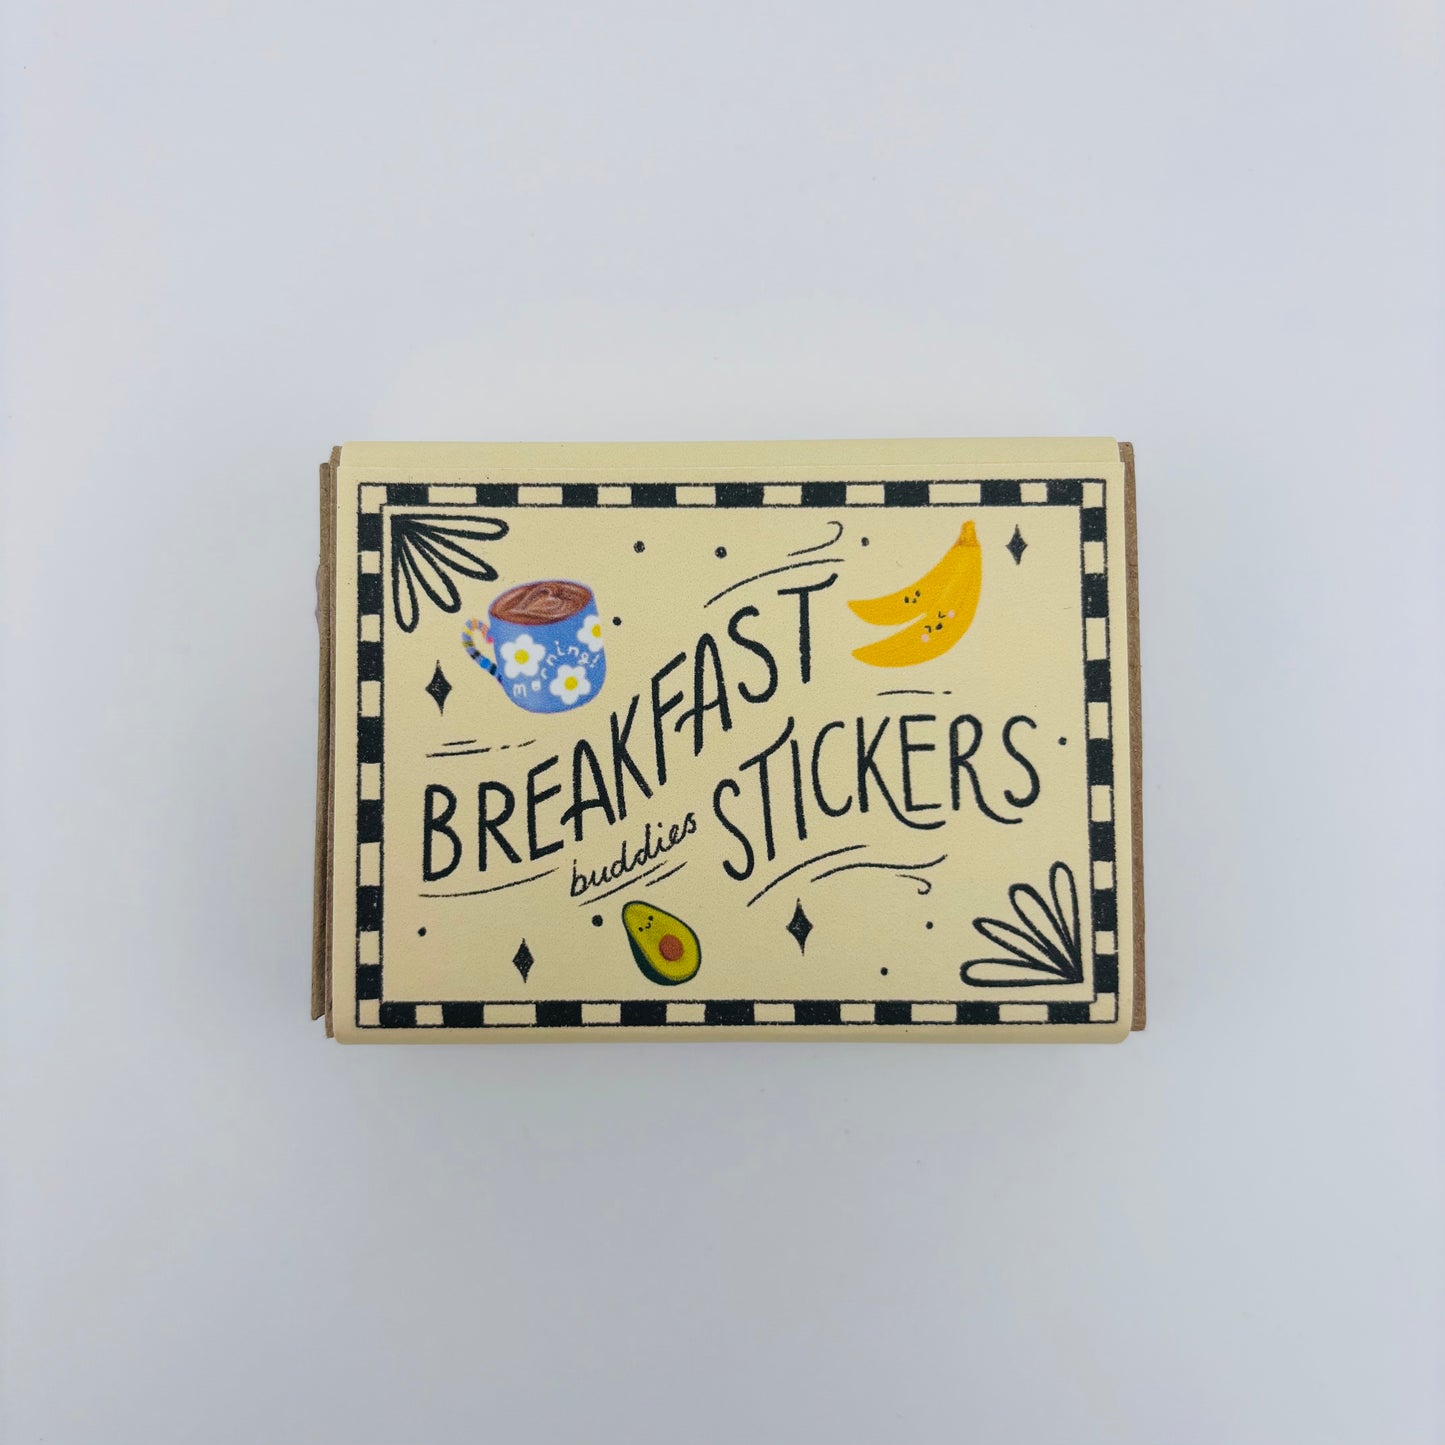 Breakfast Stickers Matchbox Set